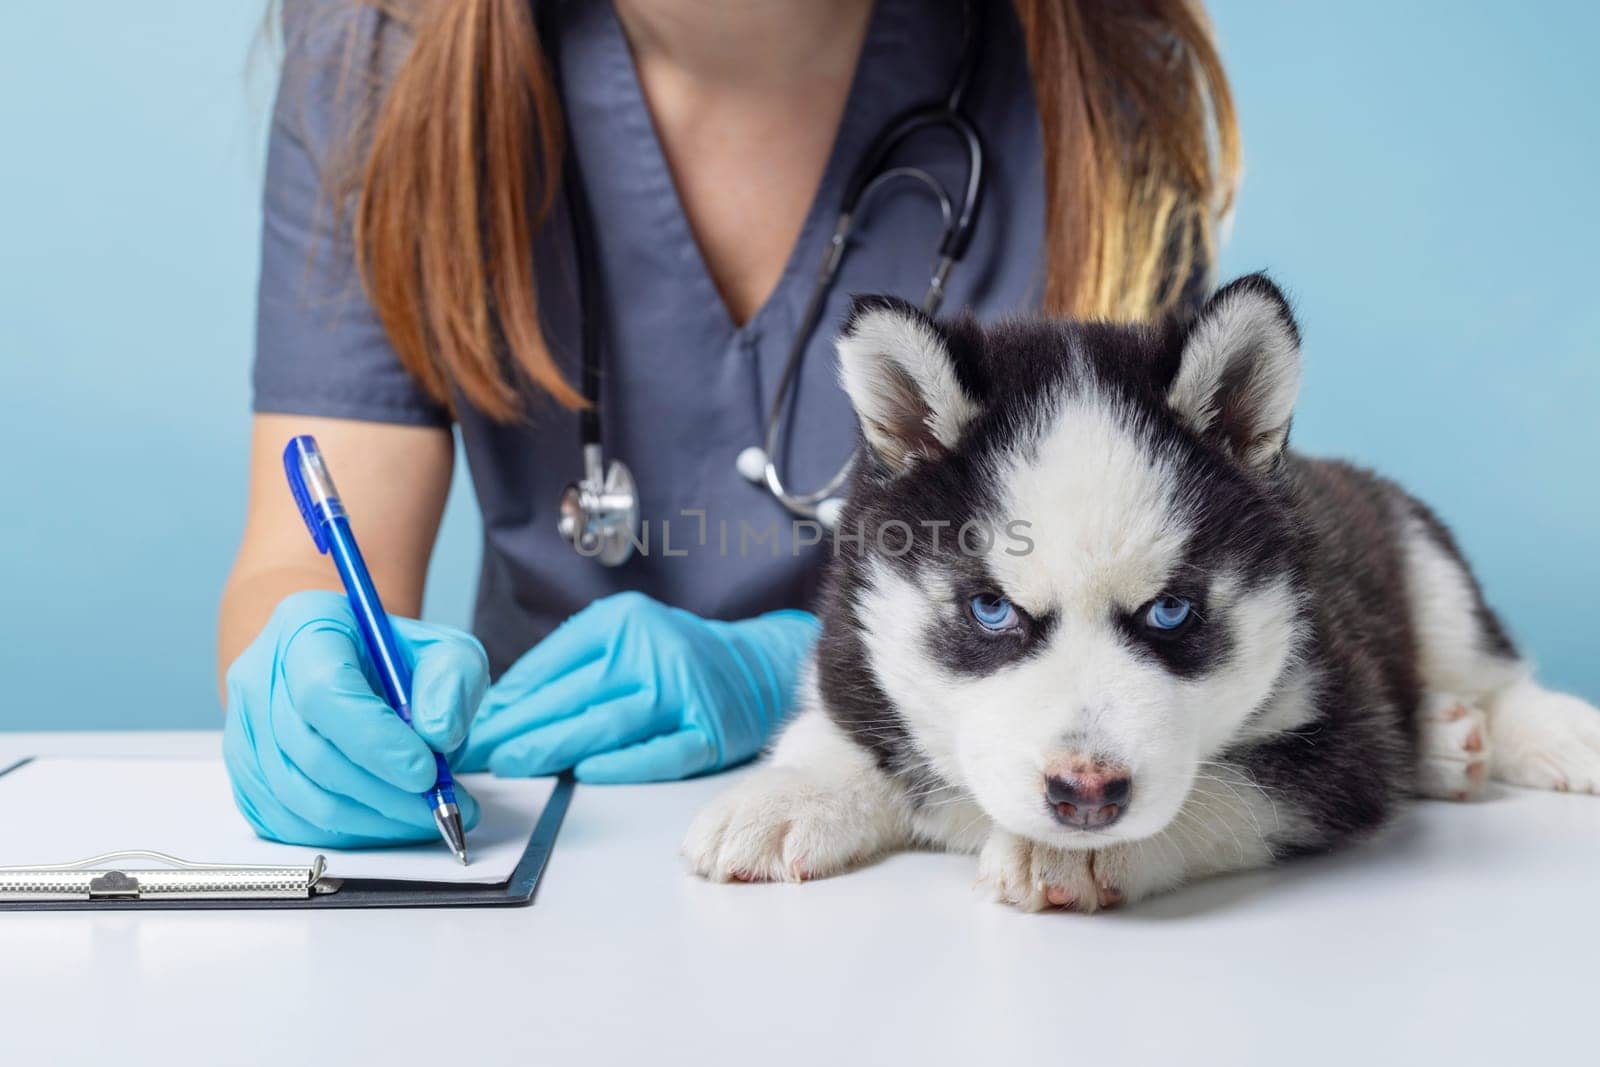 Husky Puppy at Veterinary Checkup by andreyz